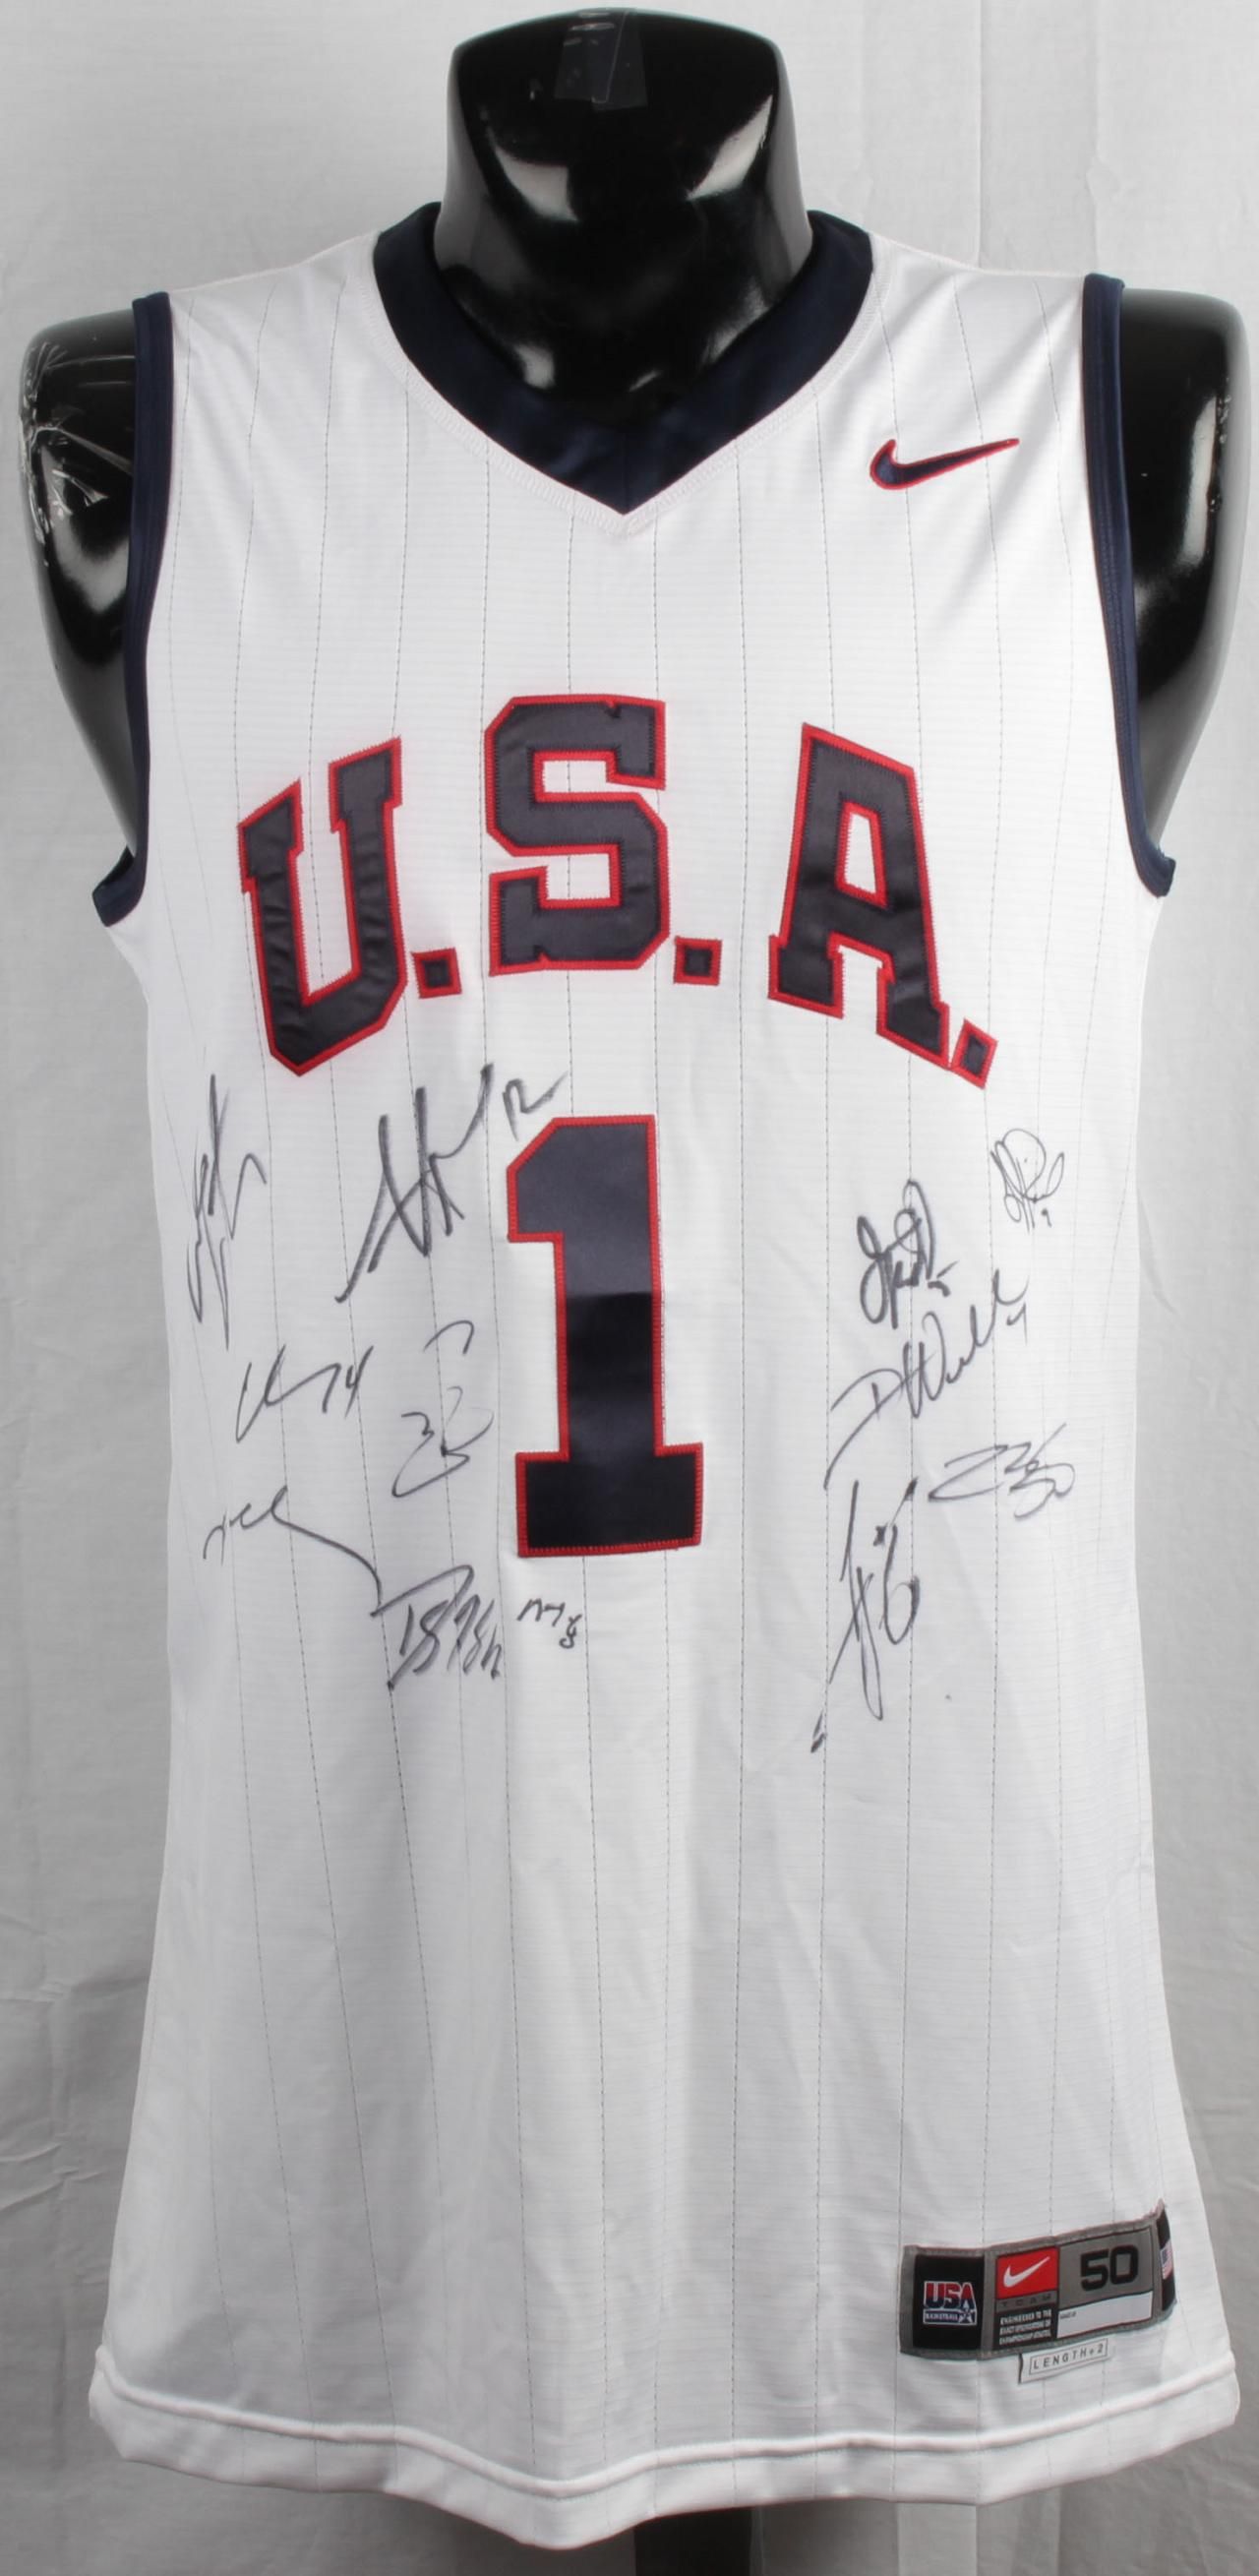 2008 USA Men's Basketball: The Redeem Team Mitchell & Ness